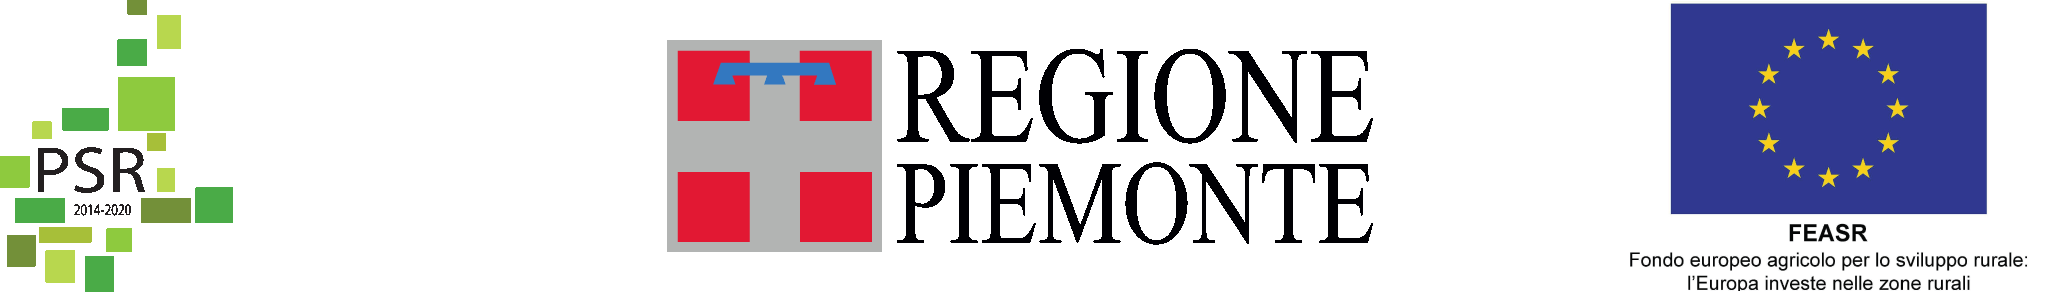 PSR 1 logo